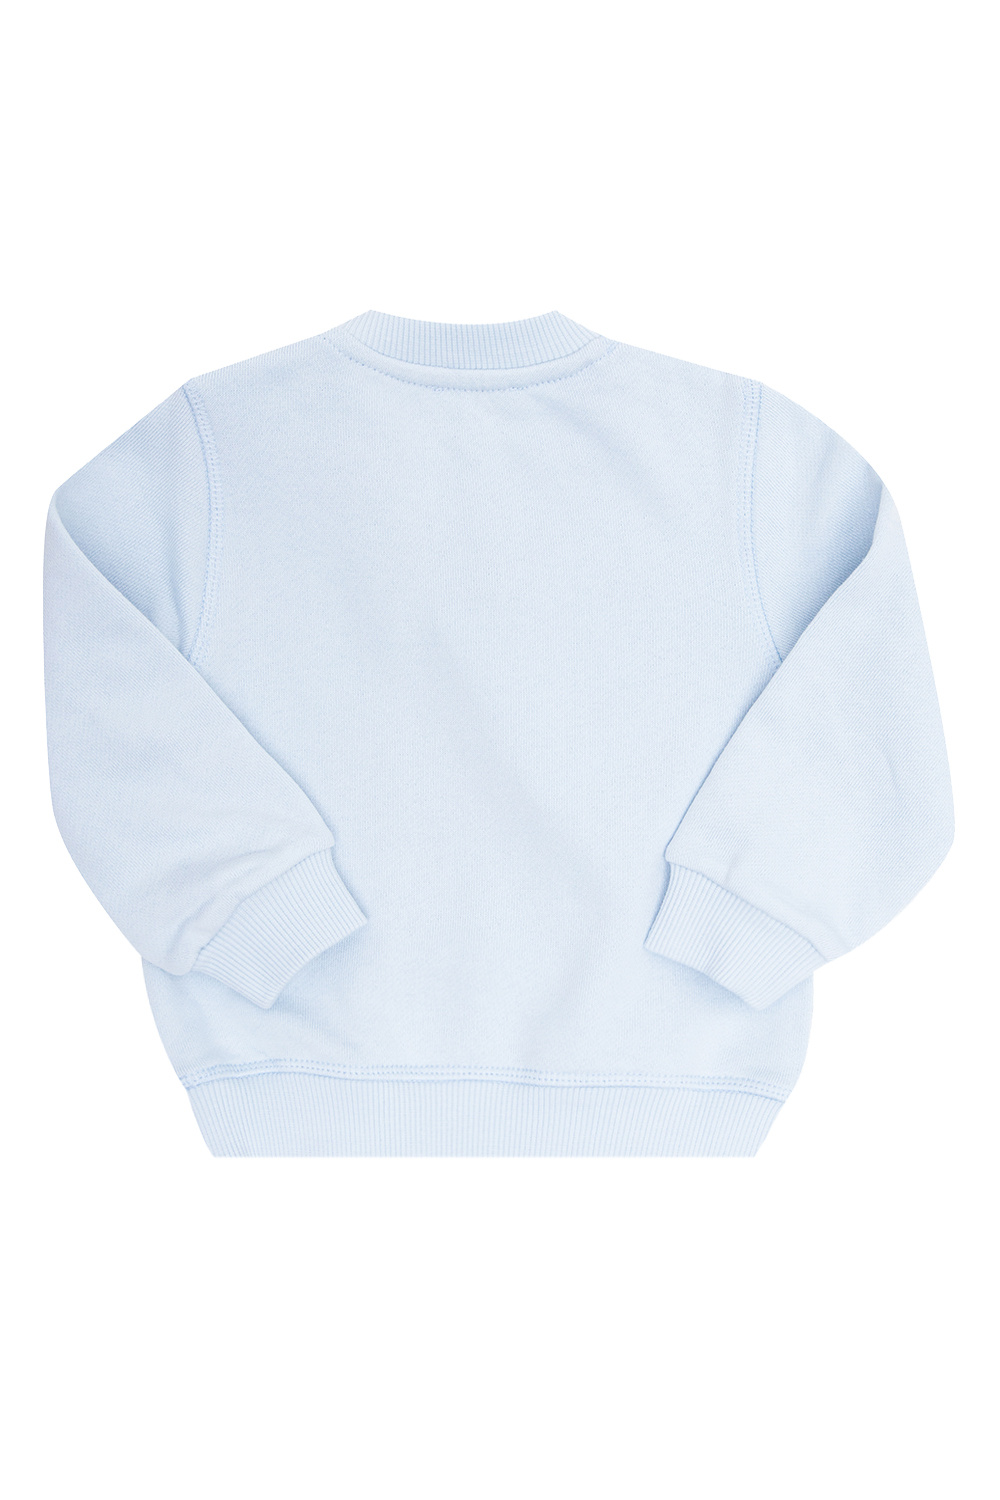 IetpShops Guinea - The North Face Zumu Sweatshirt in Schwarz - Light blue  Sweatshirt with logo Kenzo Kids